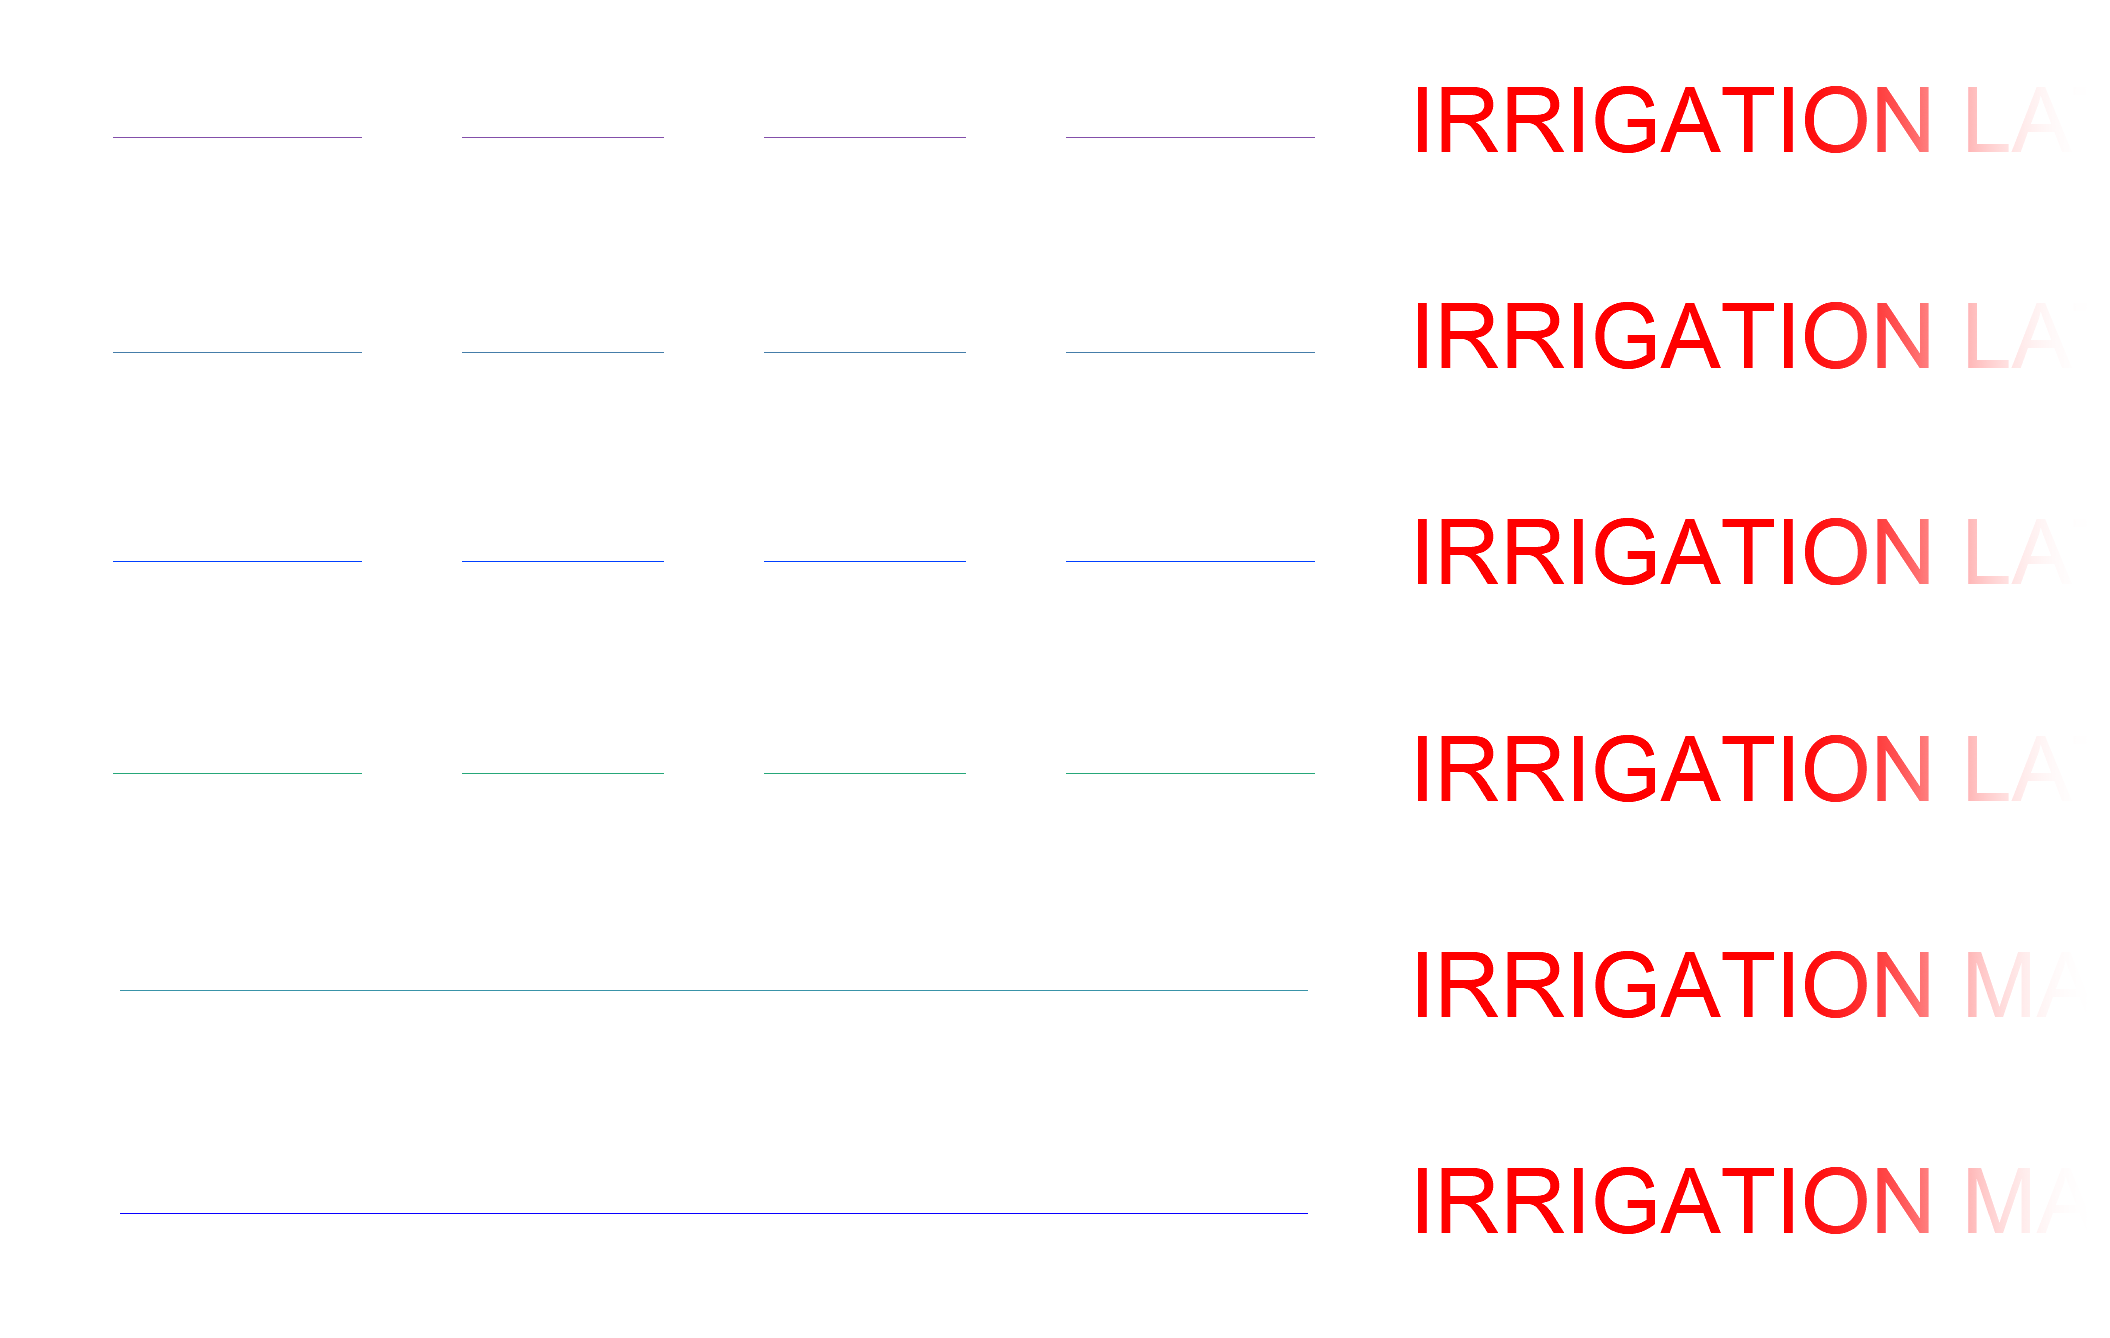 Irrigation Schedule with updated schedule symbols